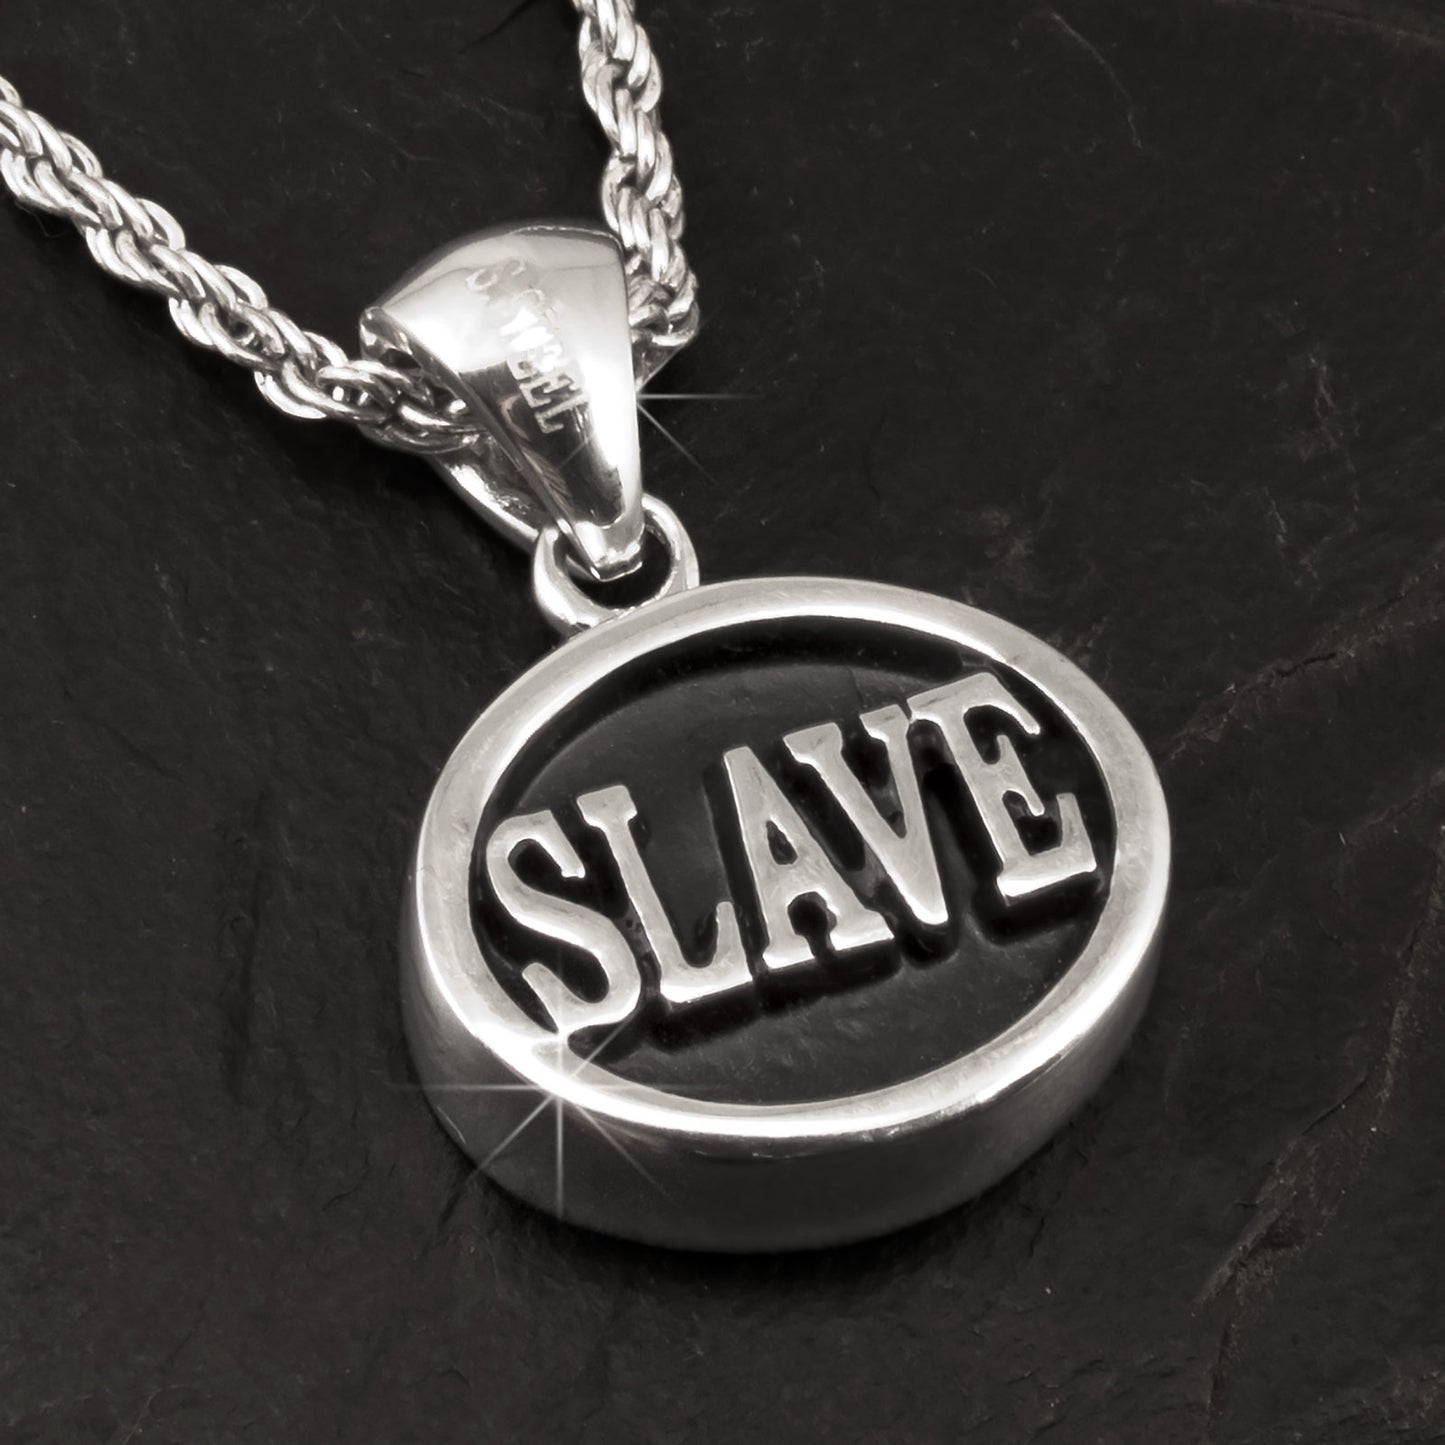 Stainless steel pendant slave